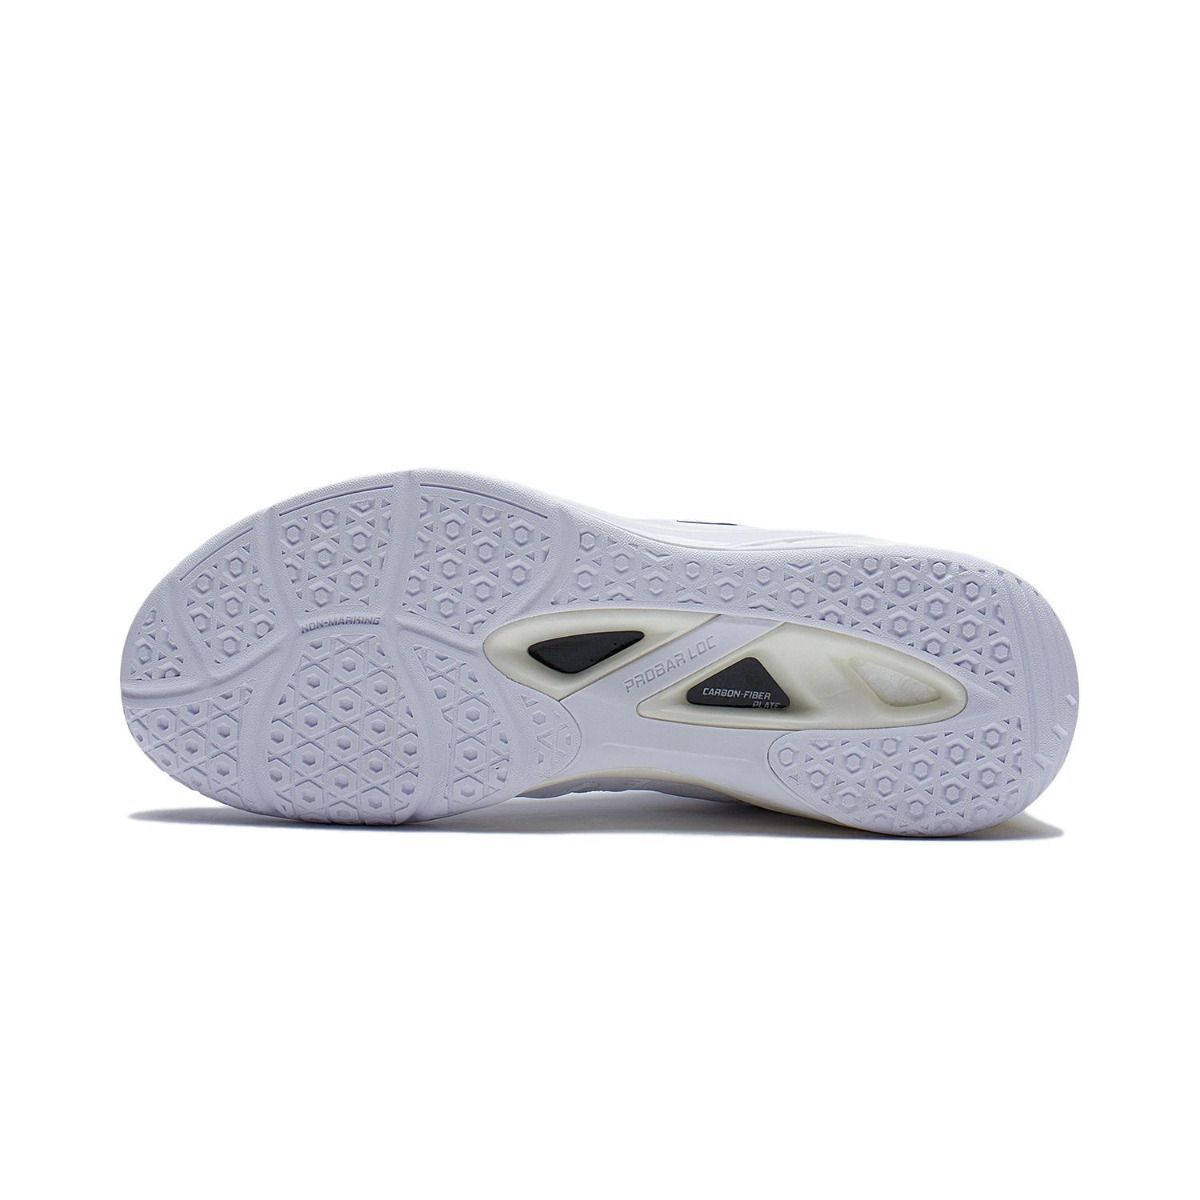 Badminton Shoes – Zhang Nan Signature, Standard White/ Gold